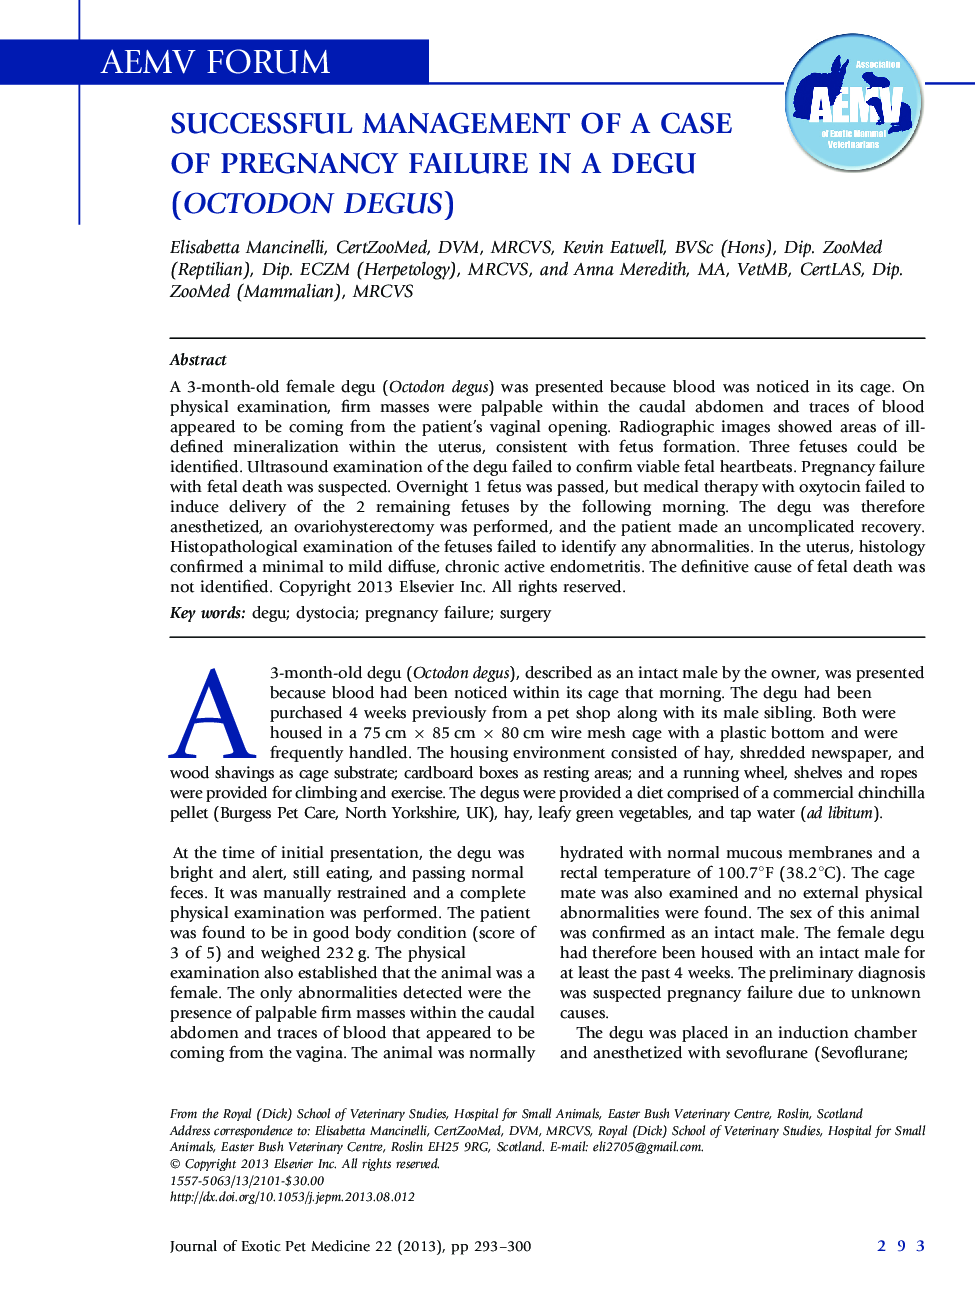 Successful Management of a Case of Pregnancy Failure in a Degu (Octodon degus)